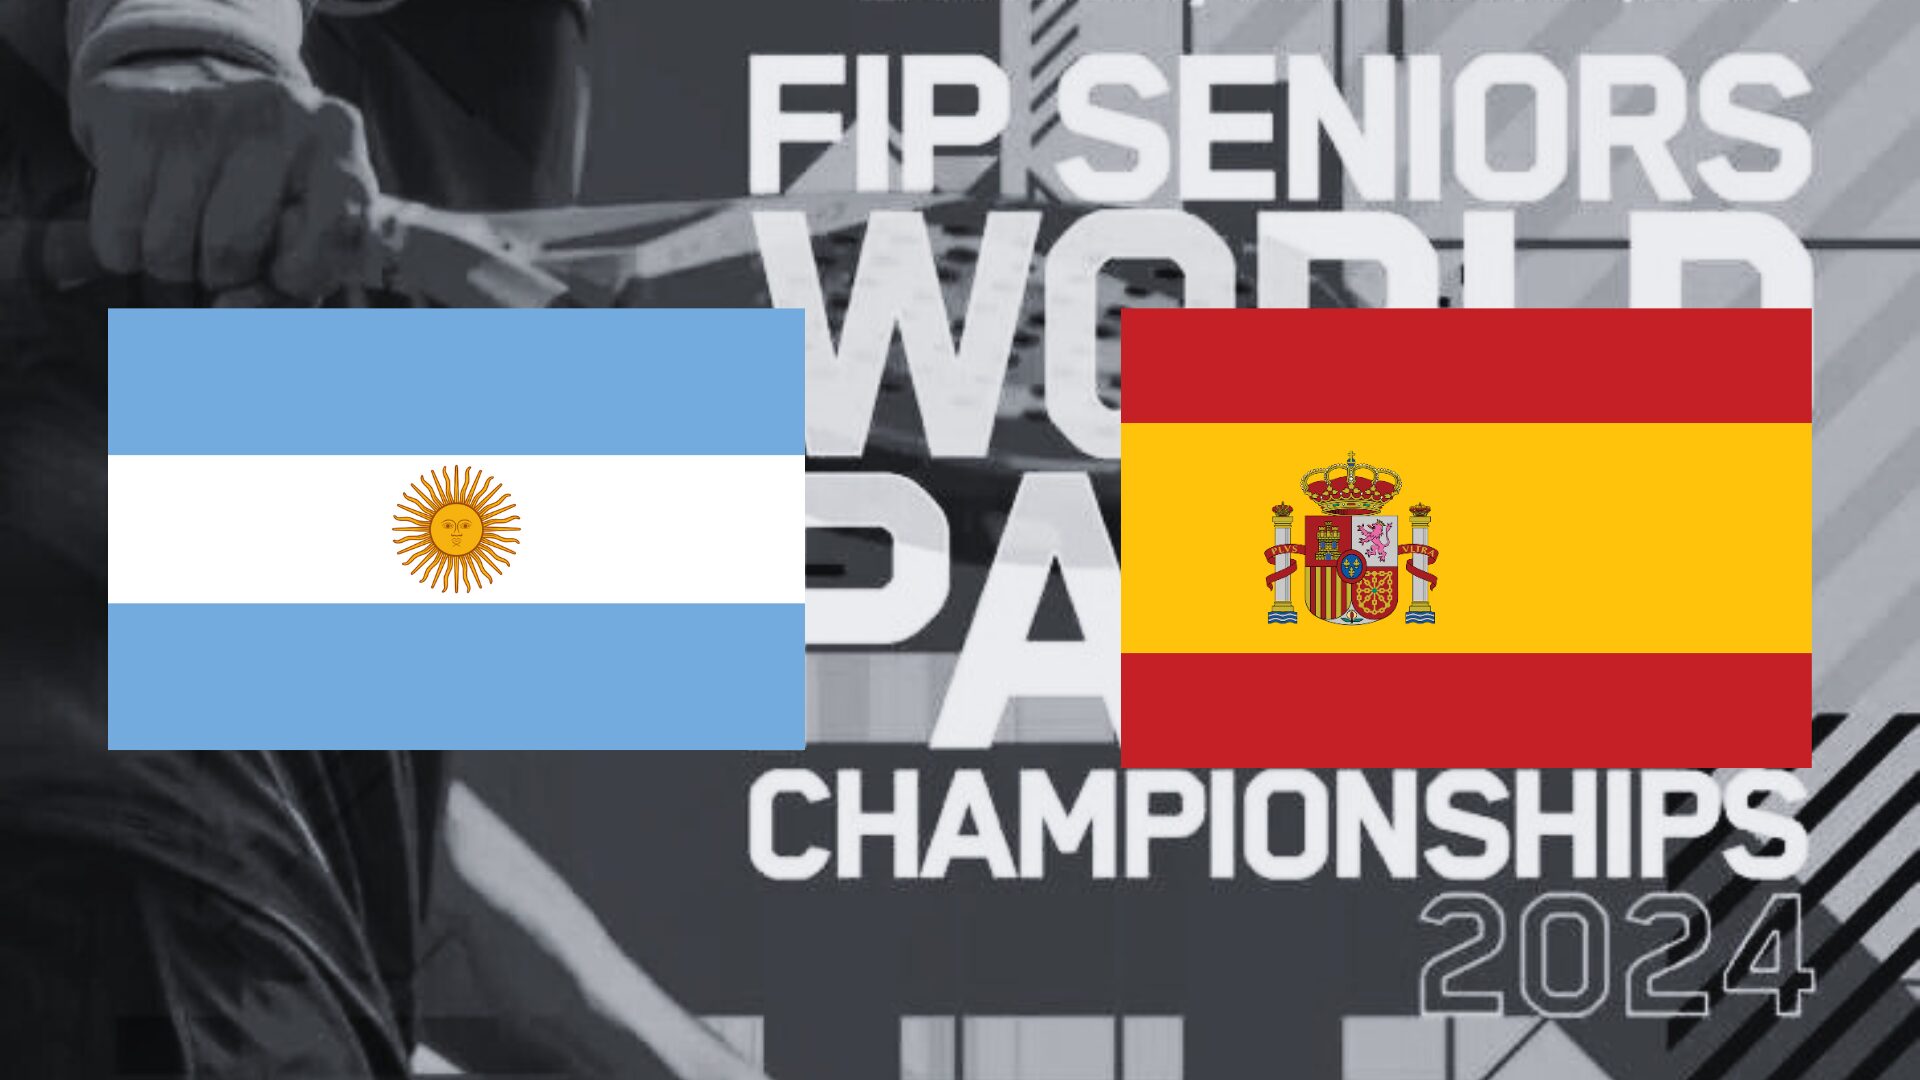 World Seniors Plus 2024: nu al de schok Spanje versus Argentinië